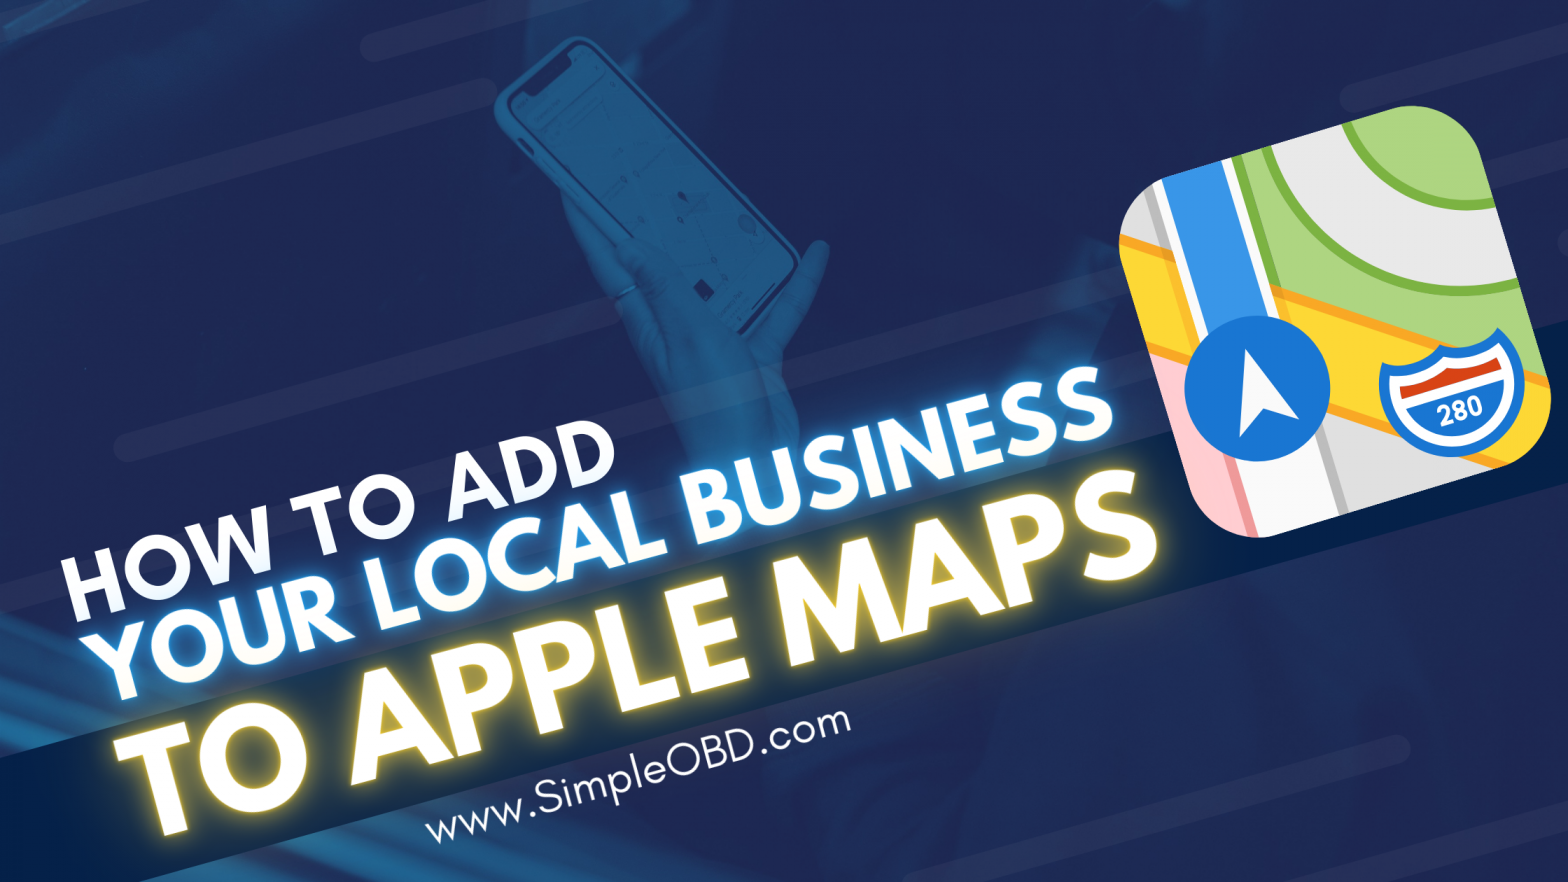 apple maps